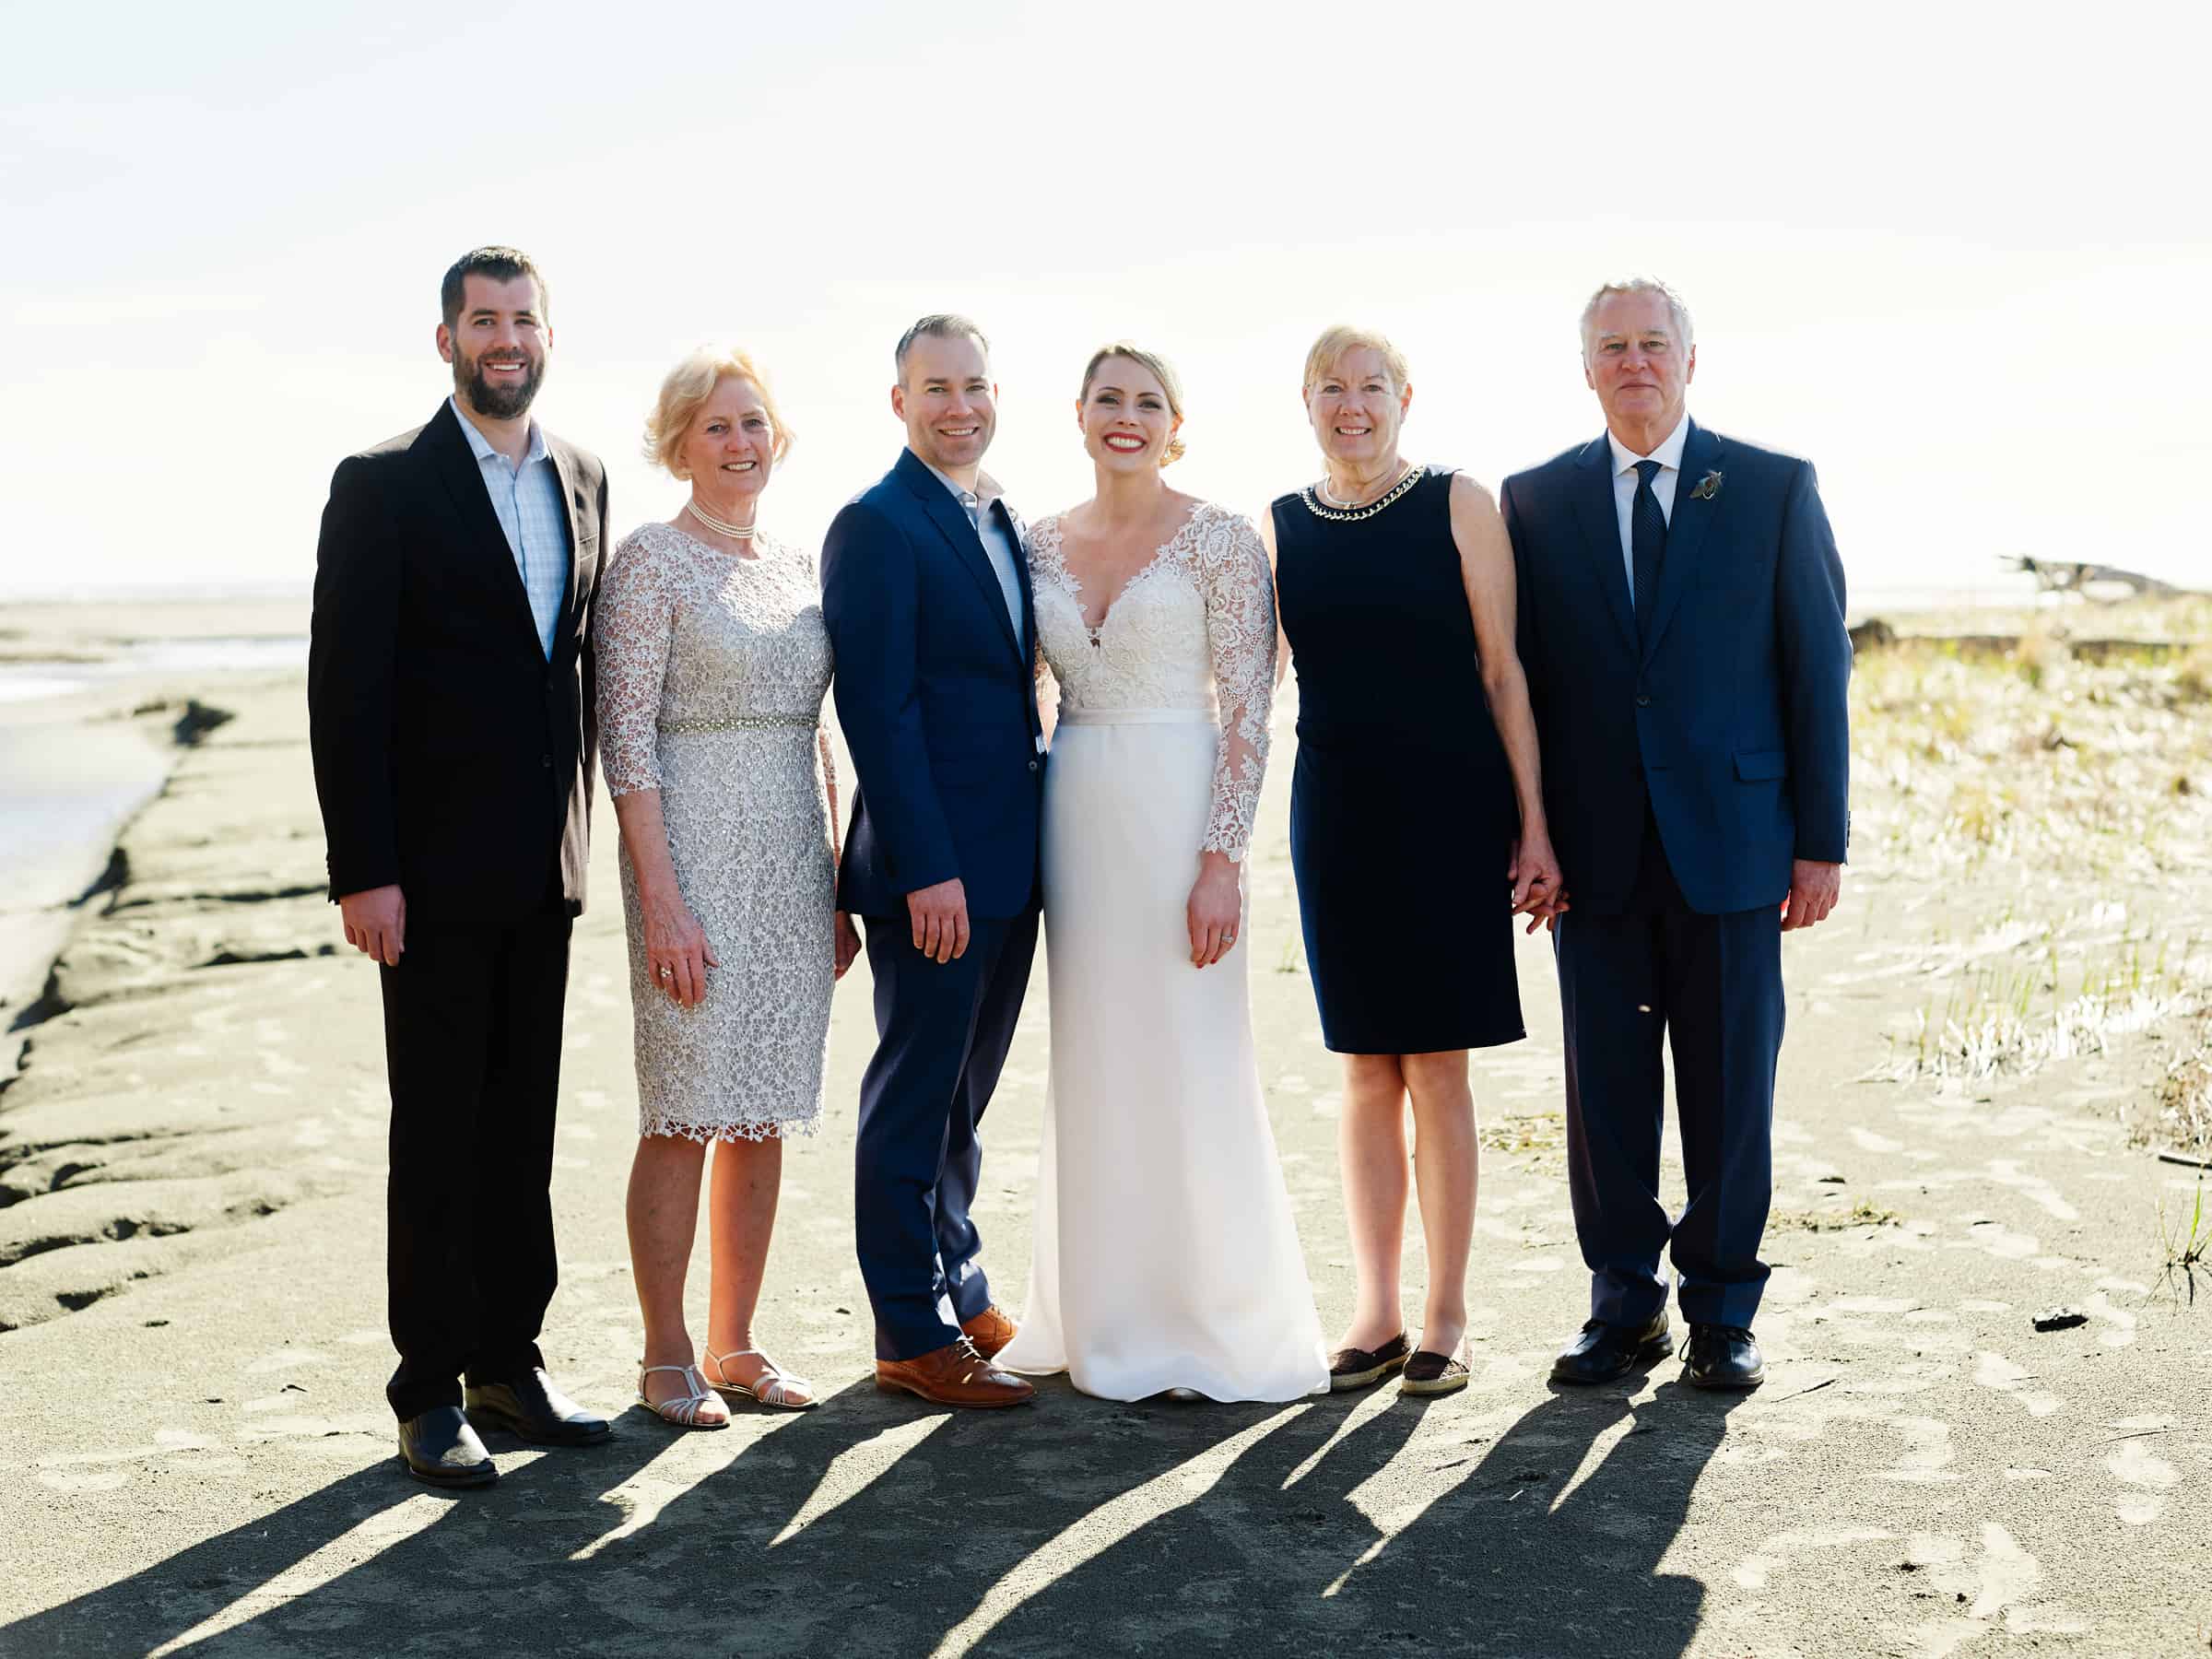 formal group portrait on beach